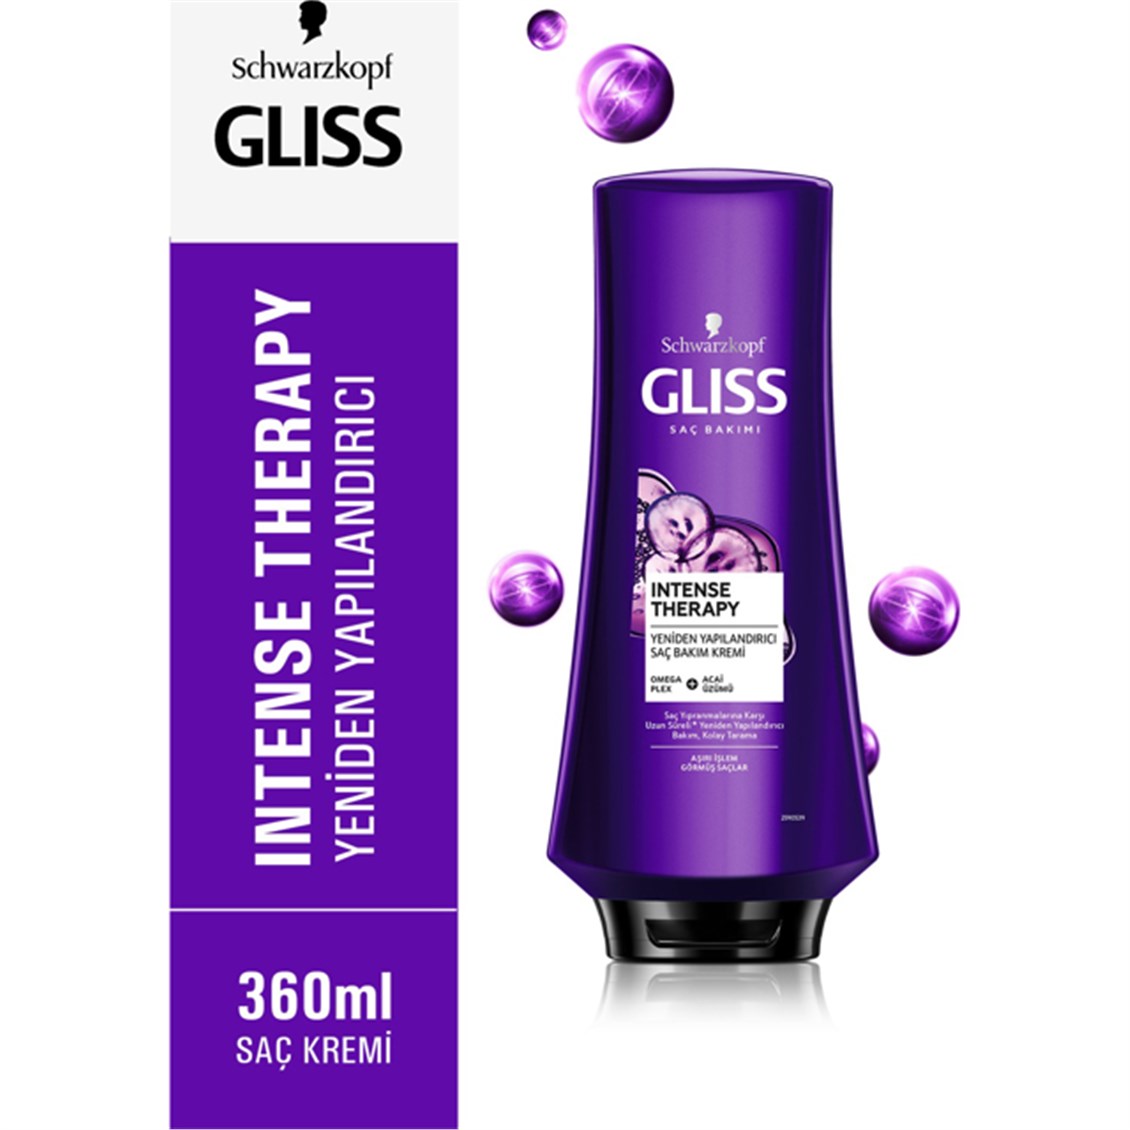 Gliss Intense Therapy Saç Kremi 360 ml - Onur Market